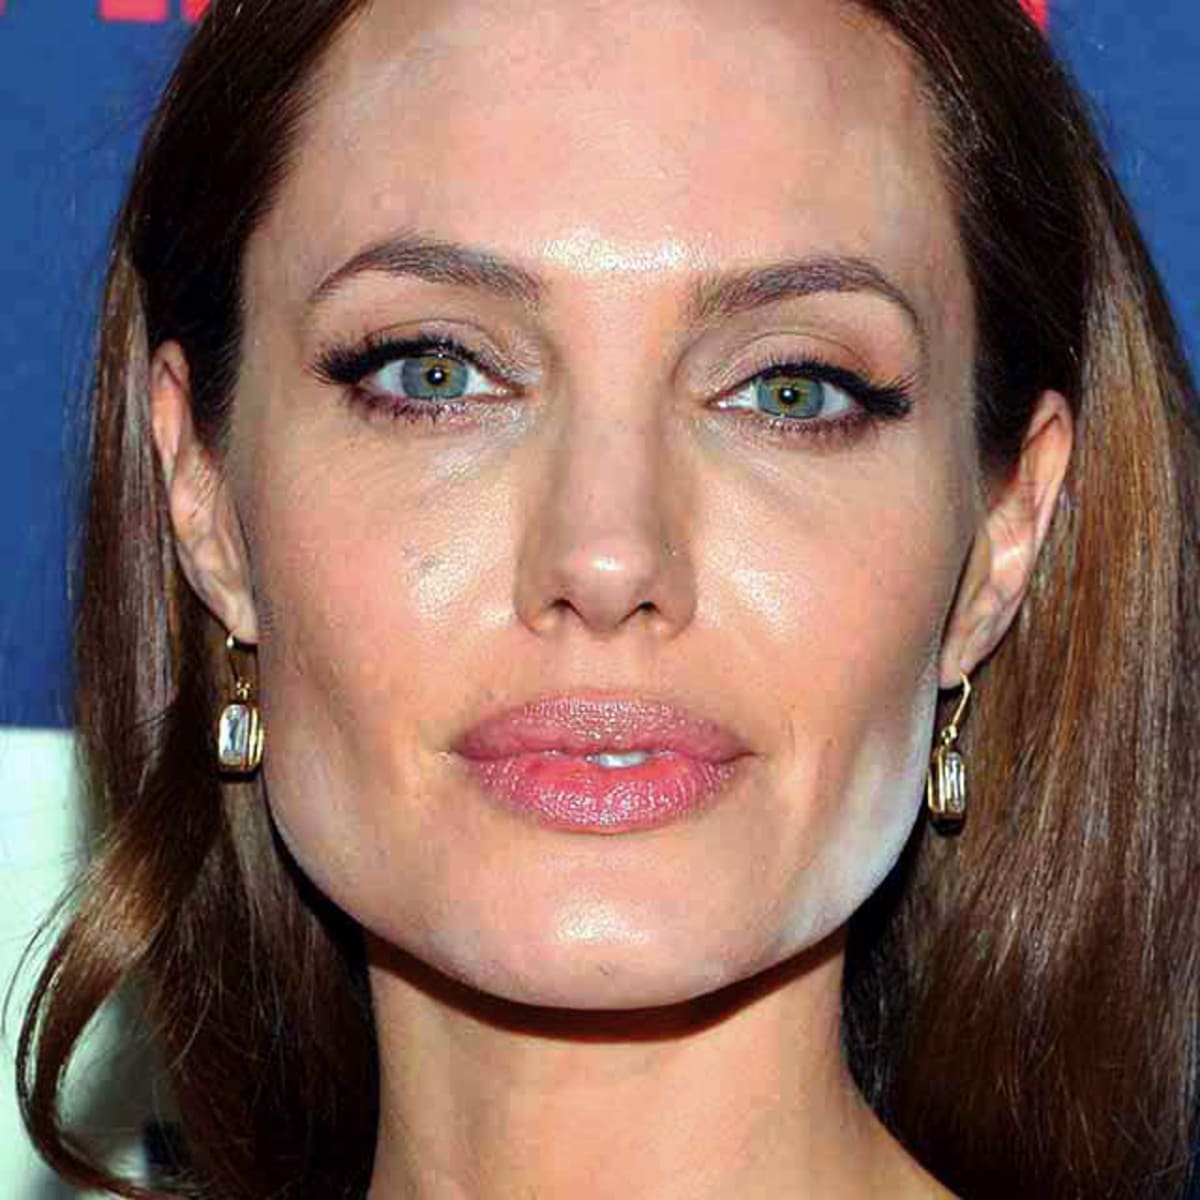 klarhed Charlotte Bronte Ombord The Angelina Jolie White Powder Incident: This Still Happens? - Beautygeeks